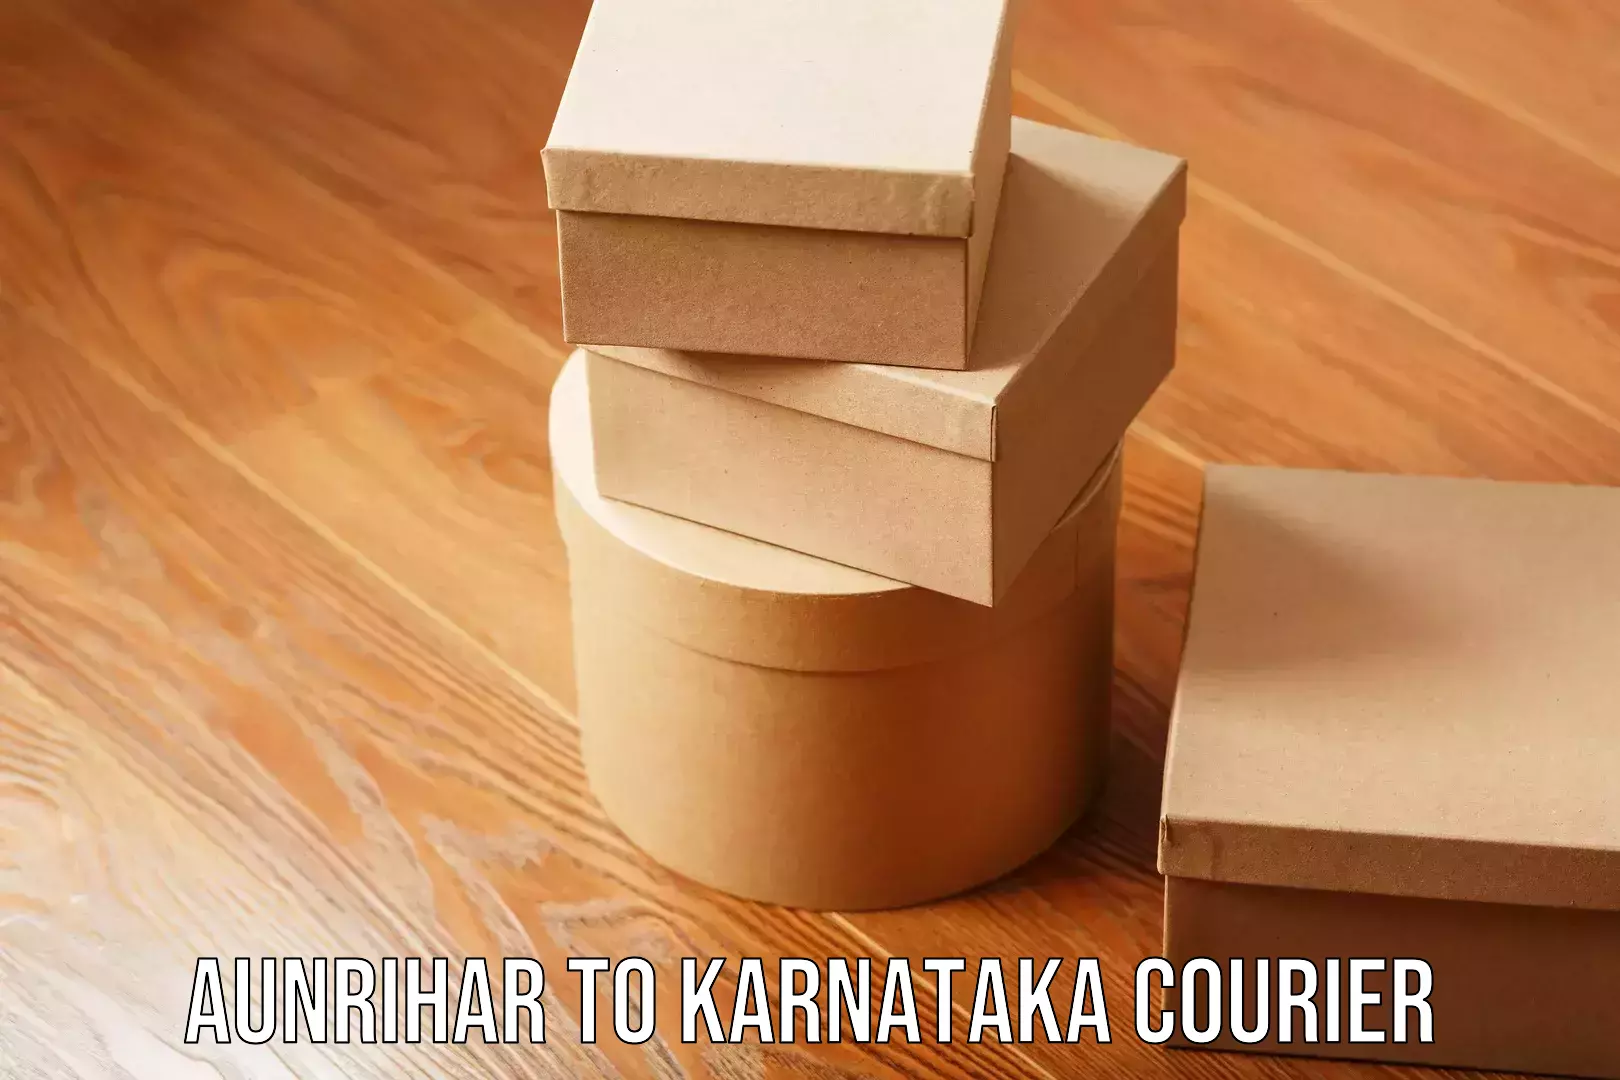 Express mail solutions Aunrihar to Karnataka